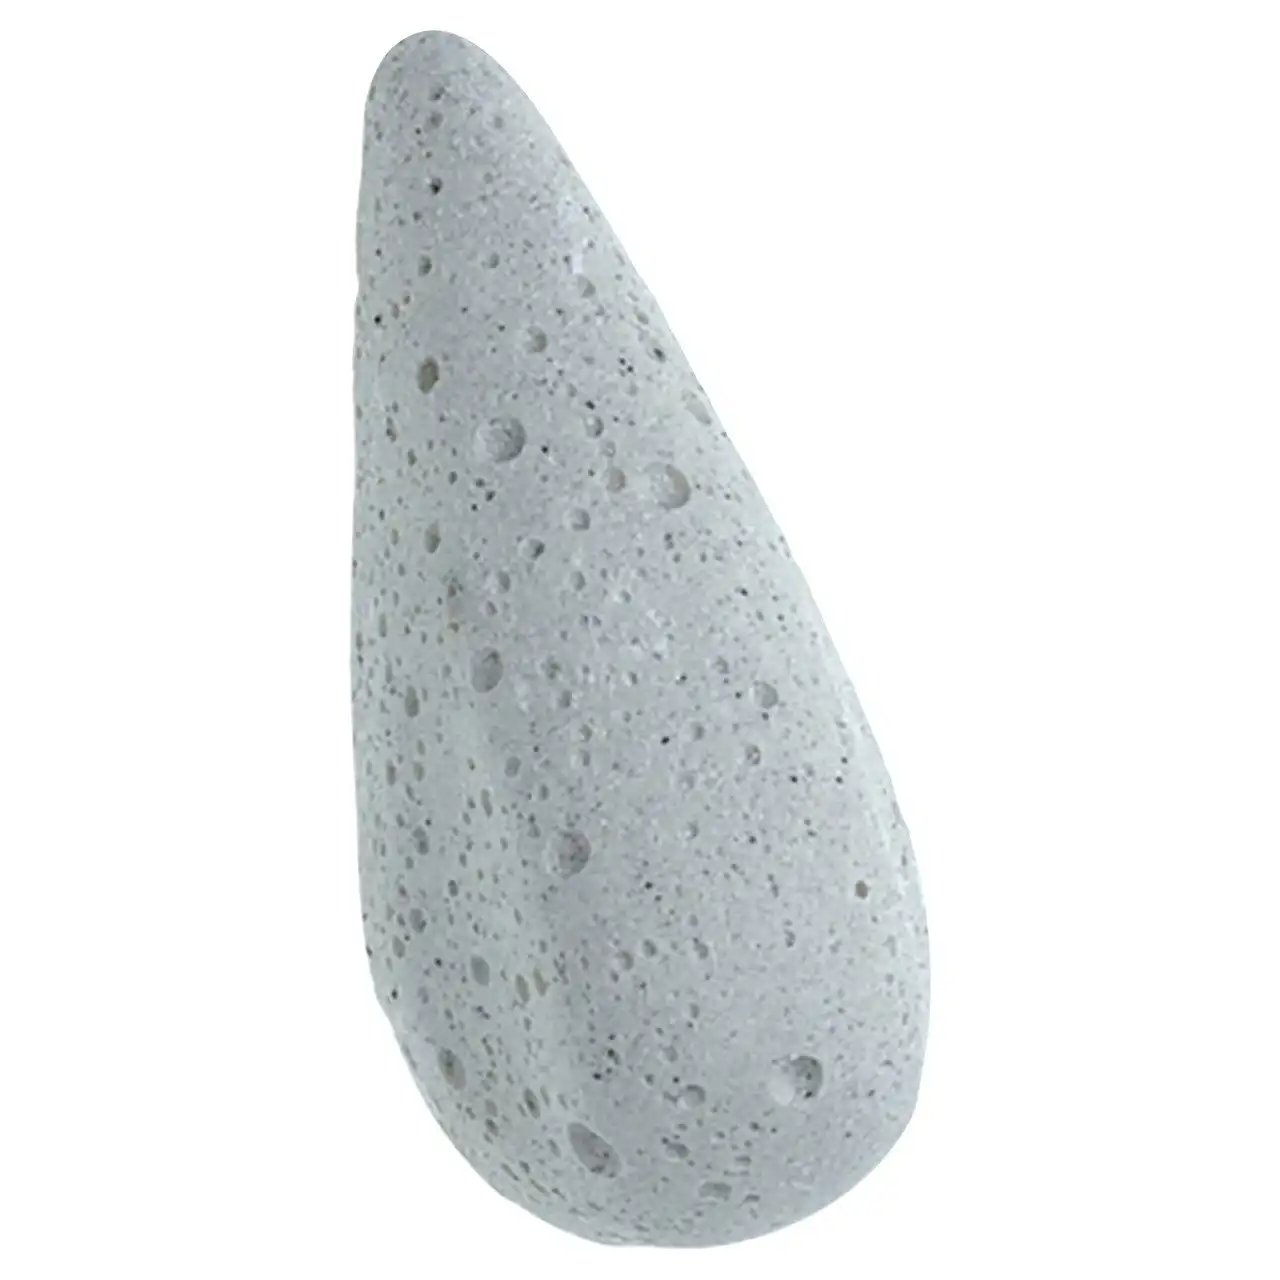 Manicare Pumice Stone